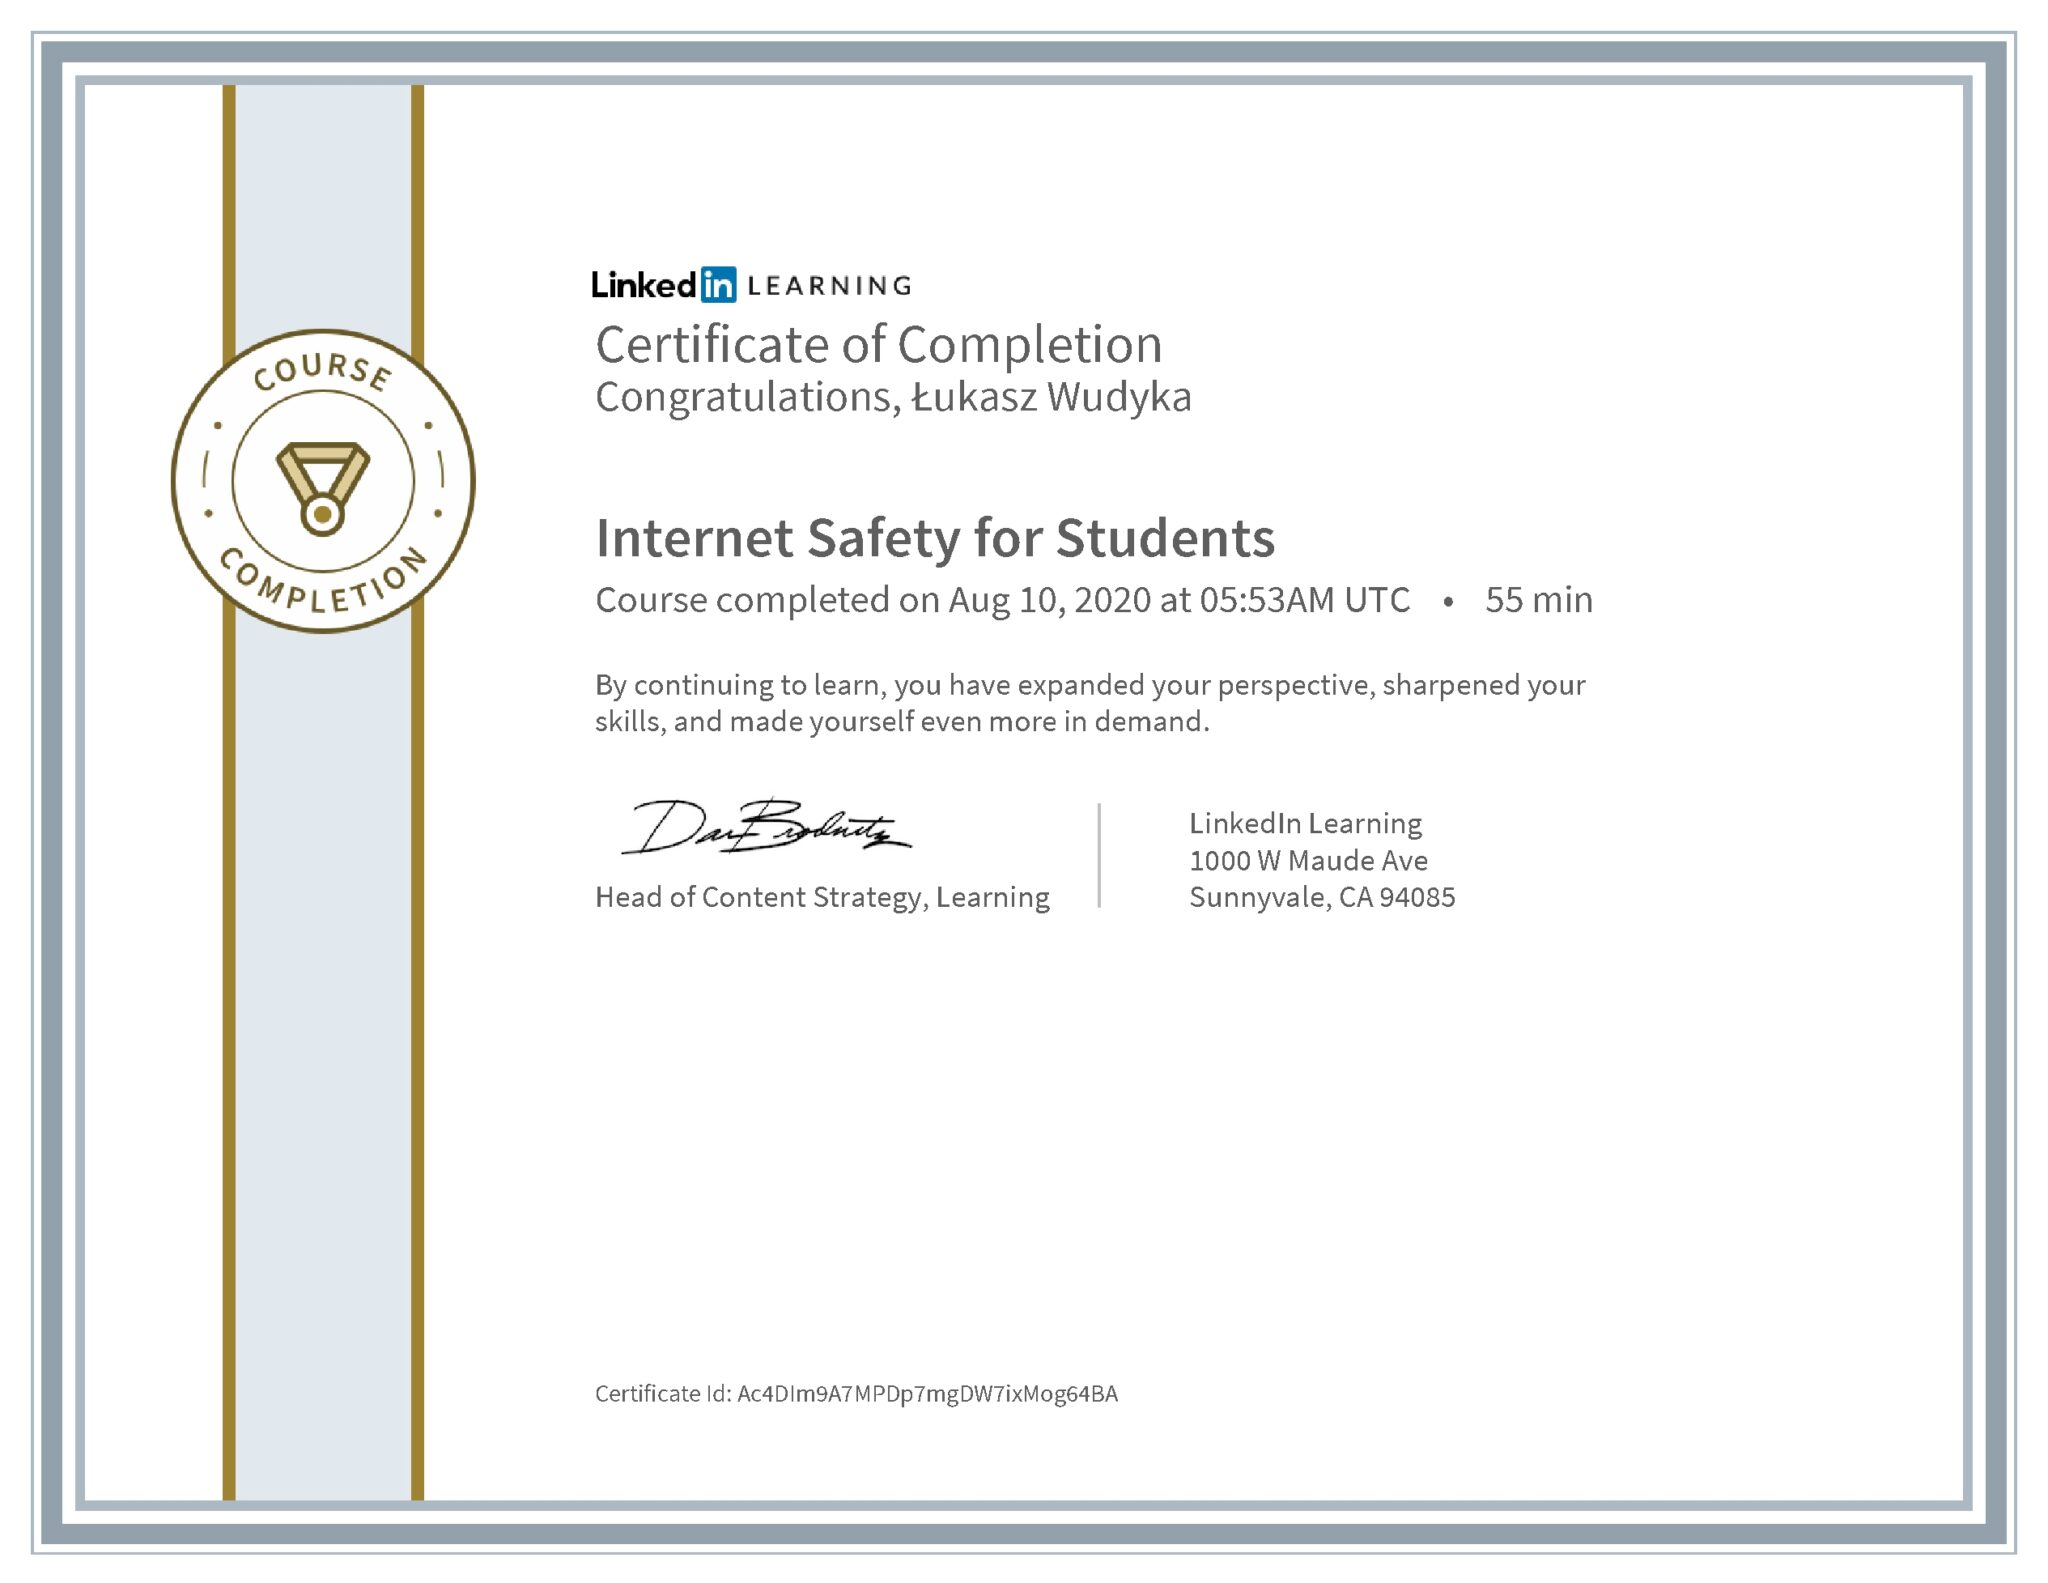 Łukasz Wudyka certyfikat LinkedIn Internet Safety for Students